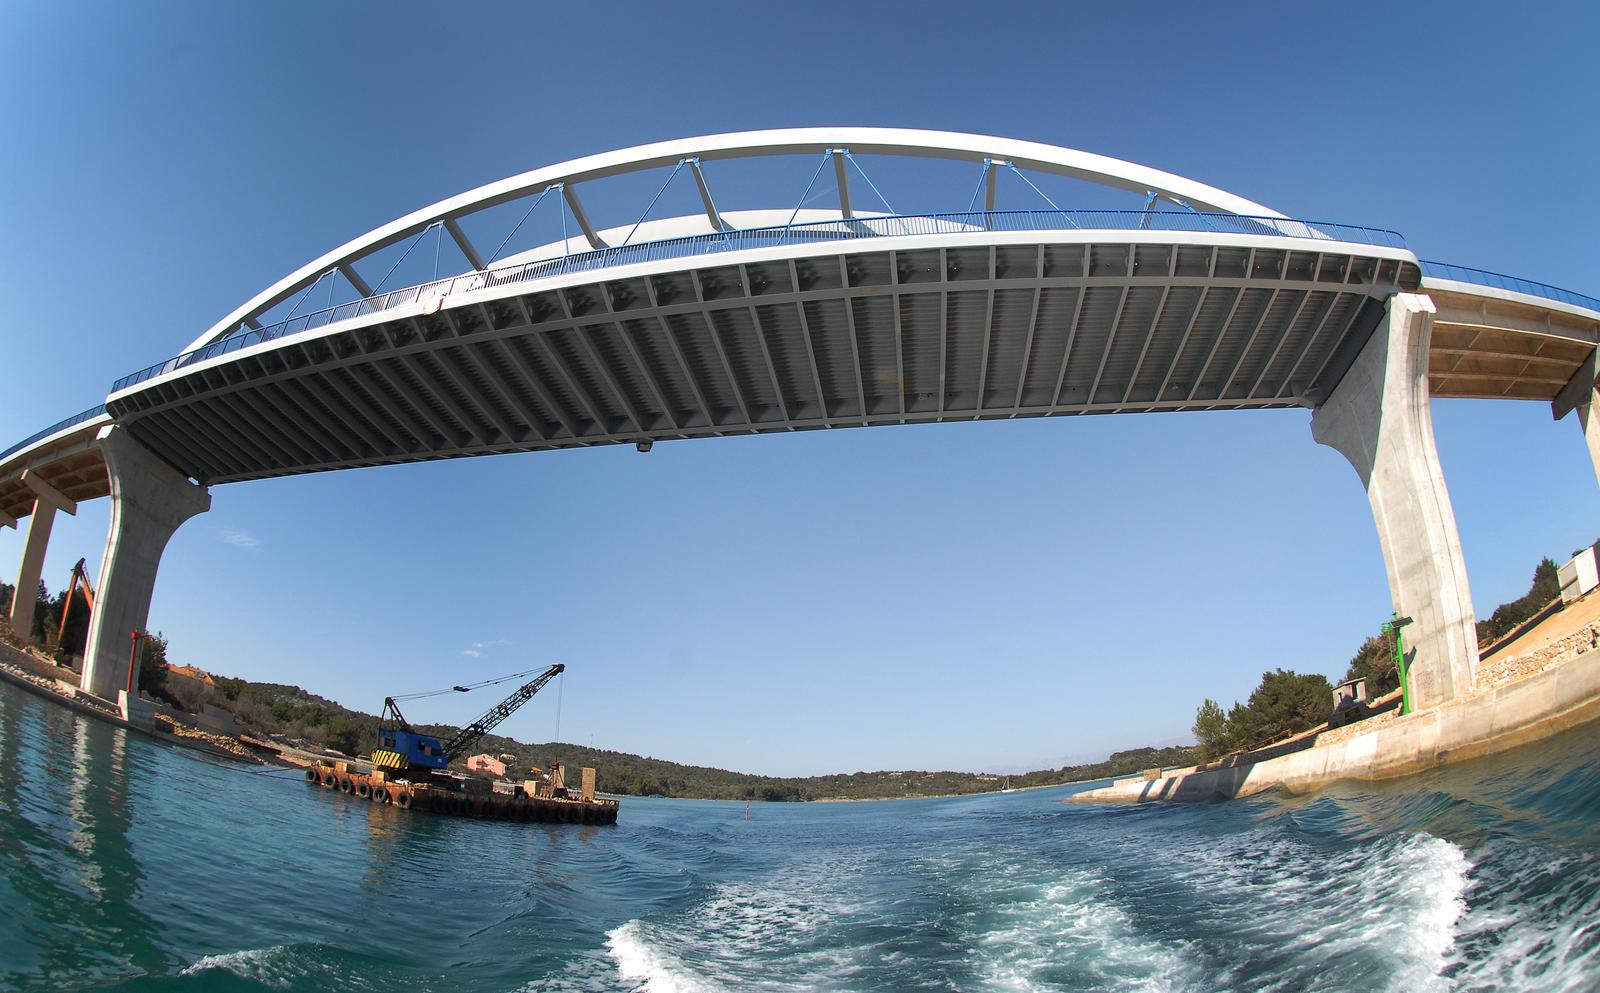 26.03.2012., Zadar- Obnovljeni Pasmanski most Zdrelac koji spaja otoke Uglan i Pasman. Ilustracija.
Photo: Dino Stanin/PIXSELL